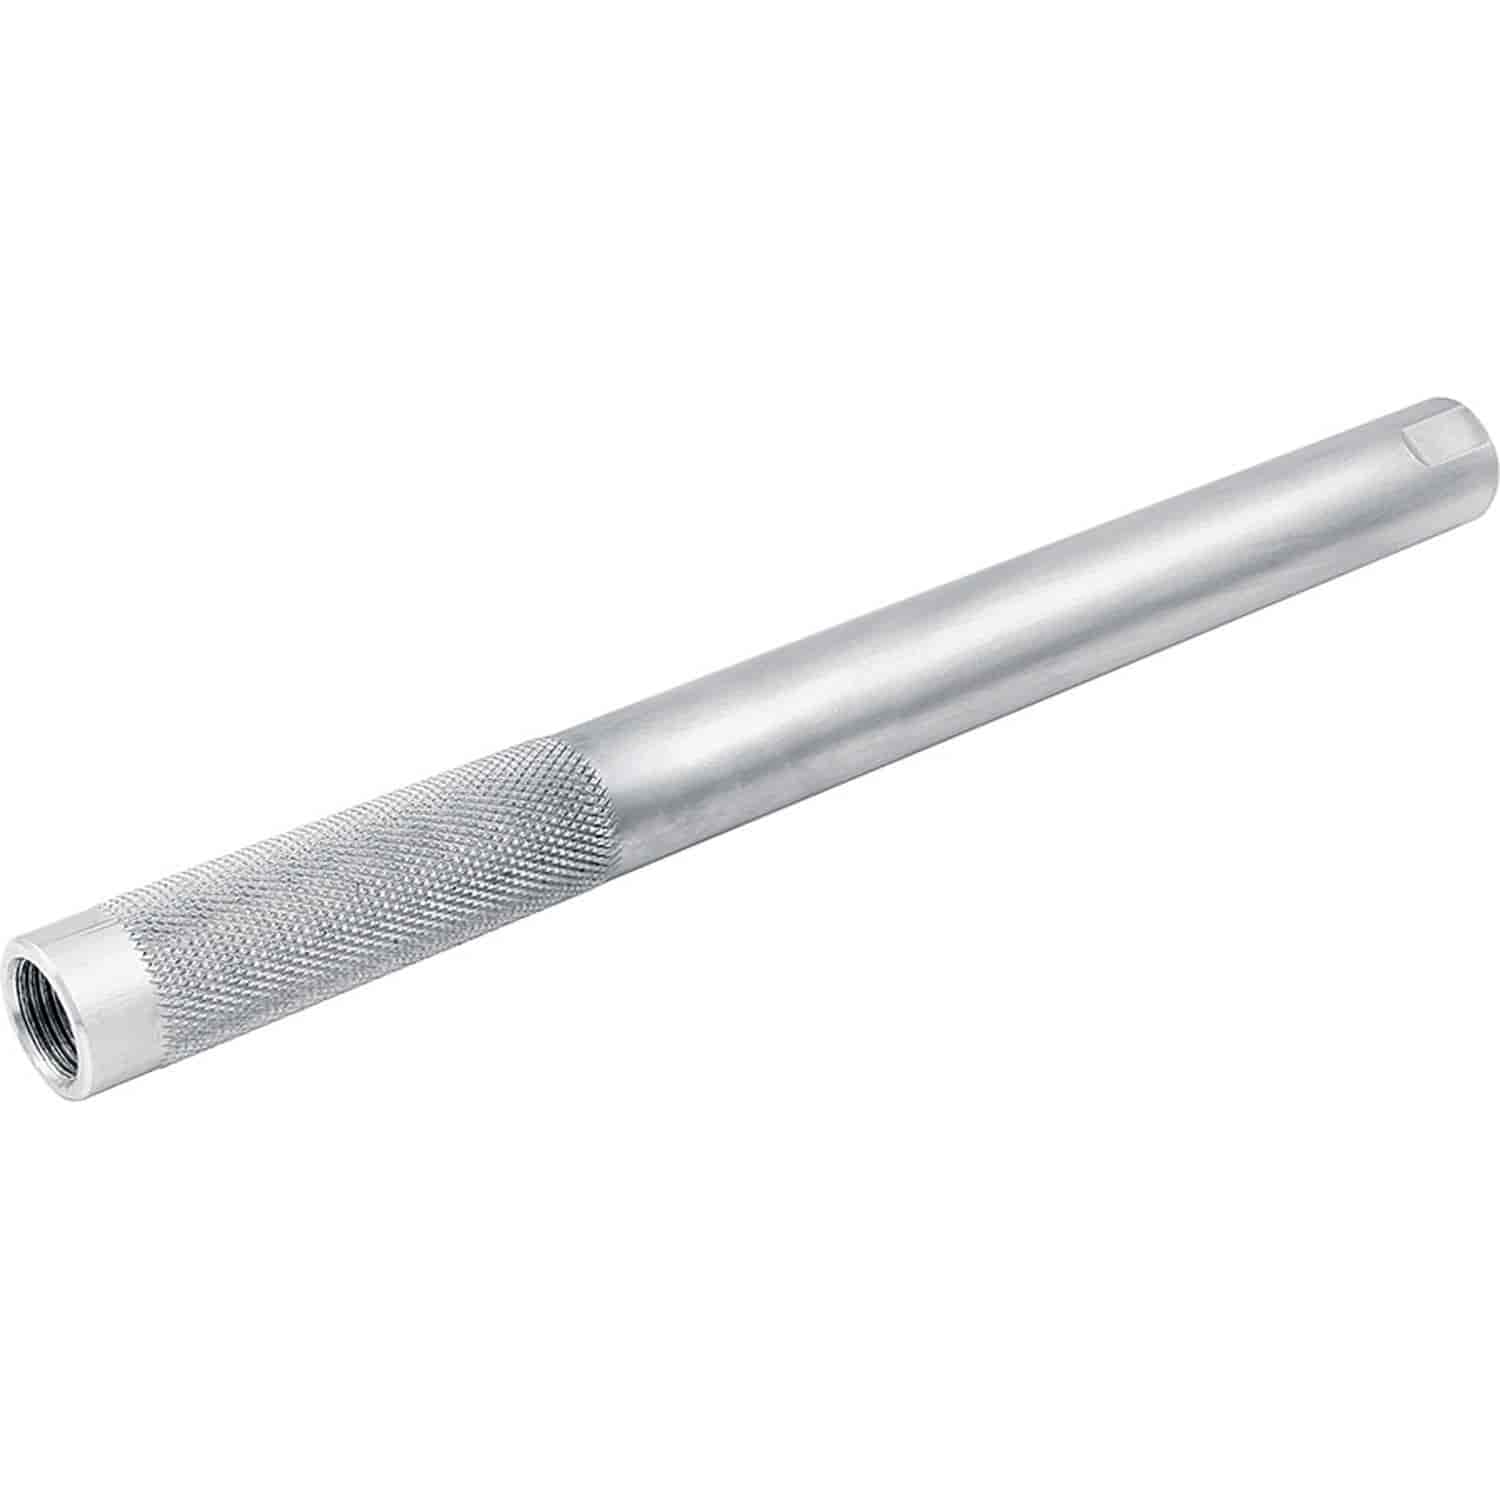 Swedged Aluminum Tie Rod Tube Length: 20"